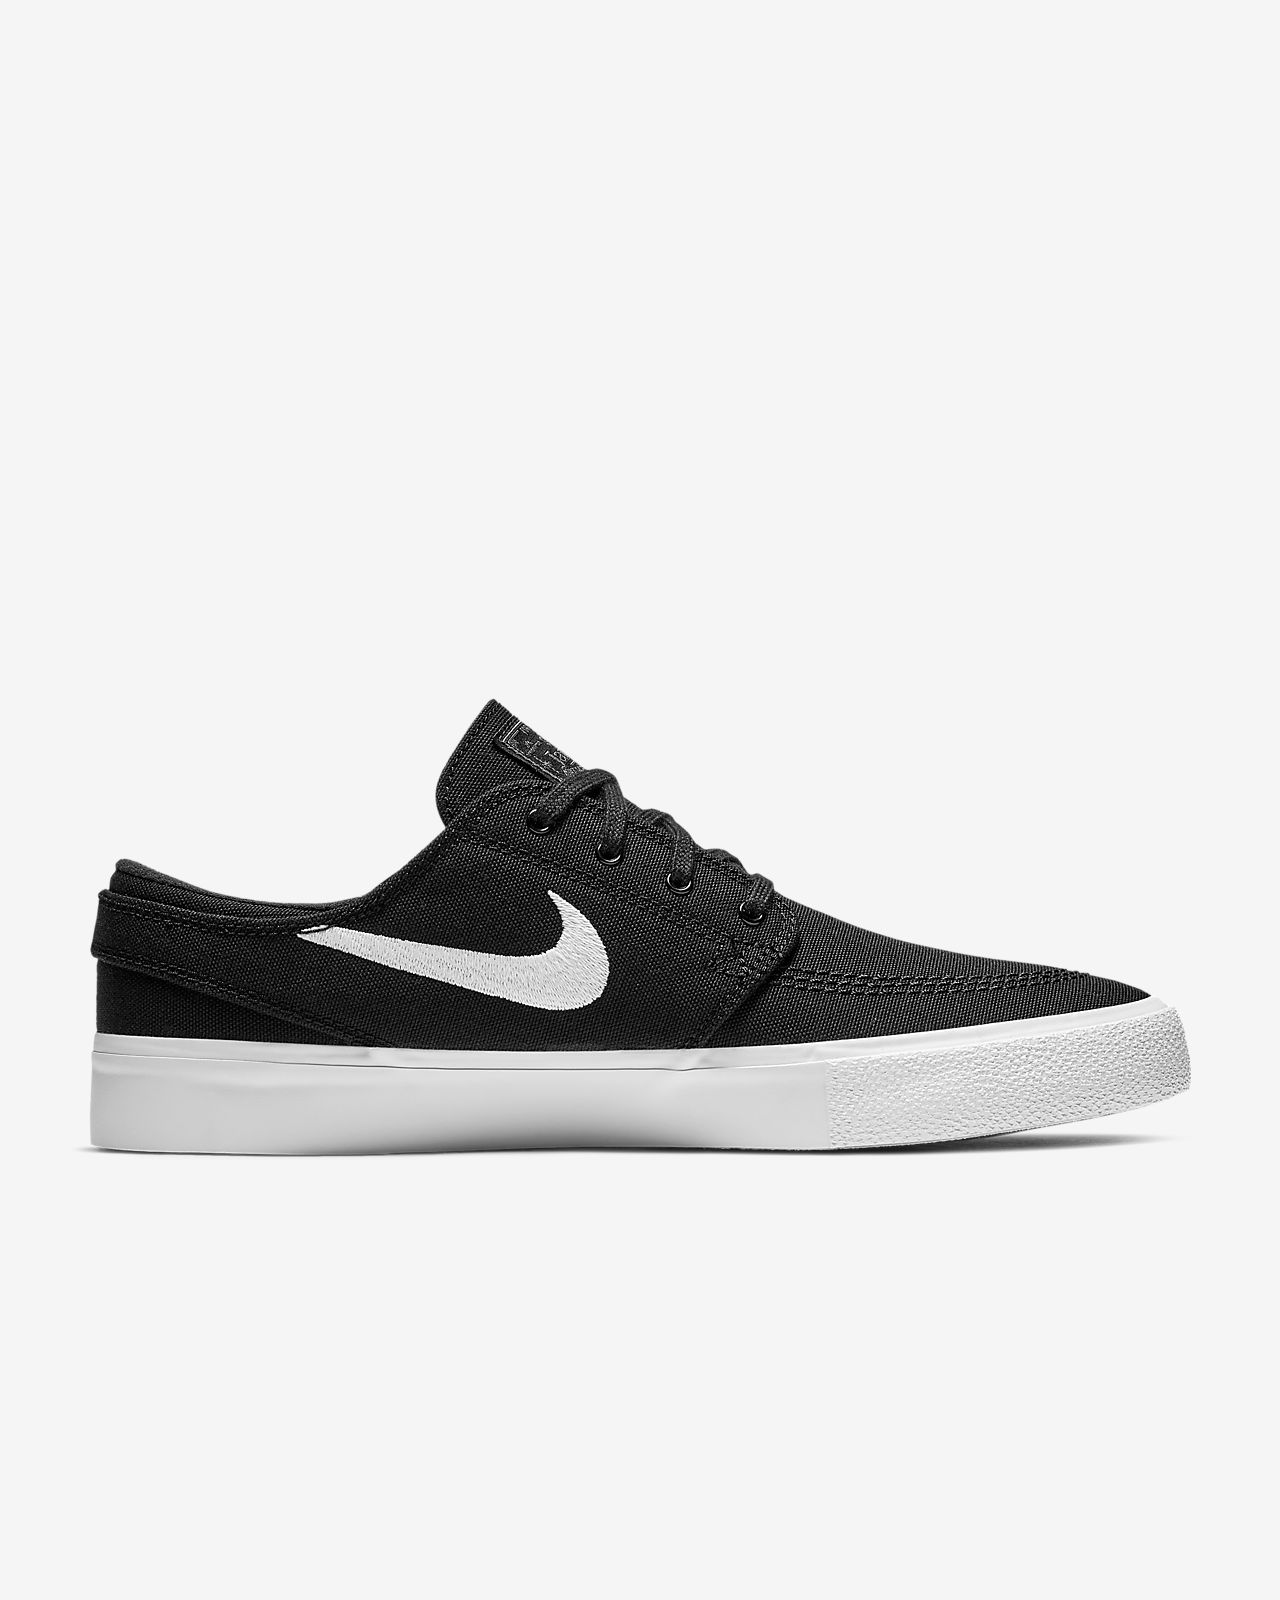 nike sb janoski rm black & white suede skate shoes